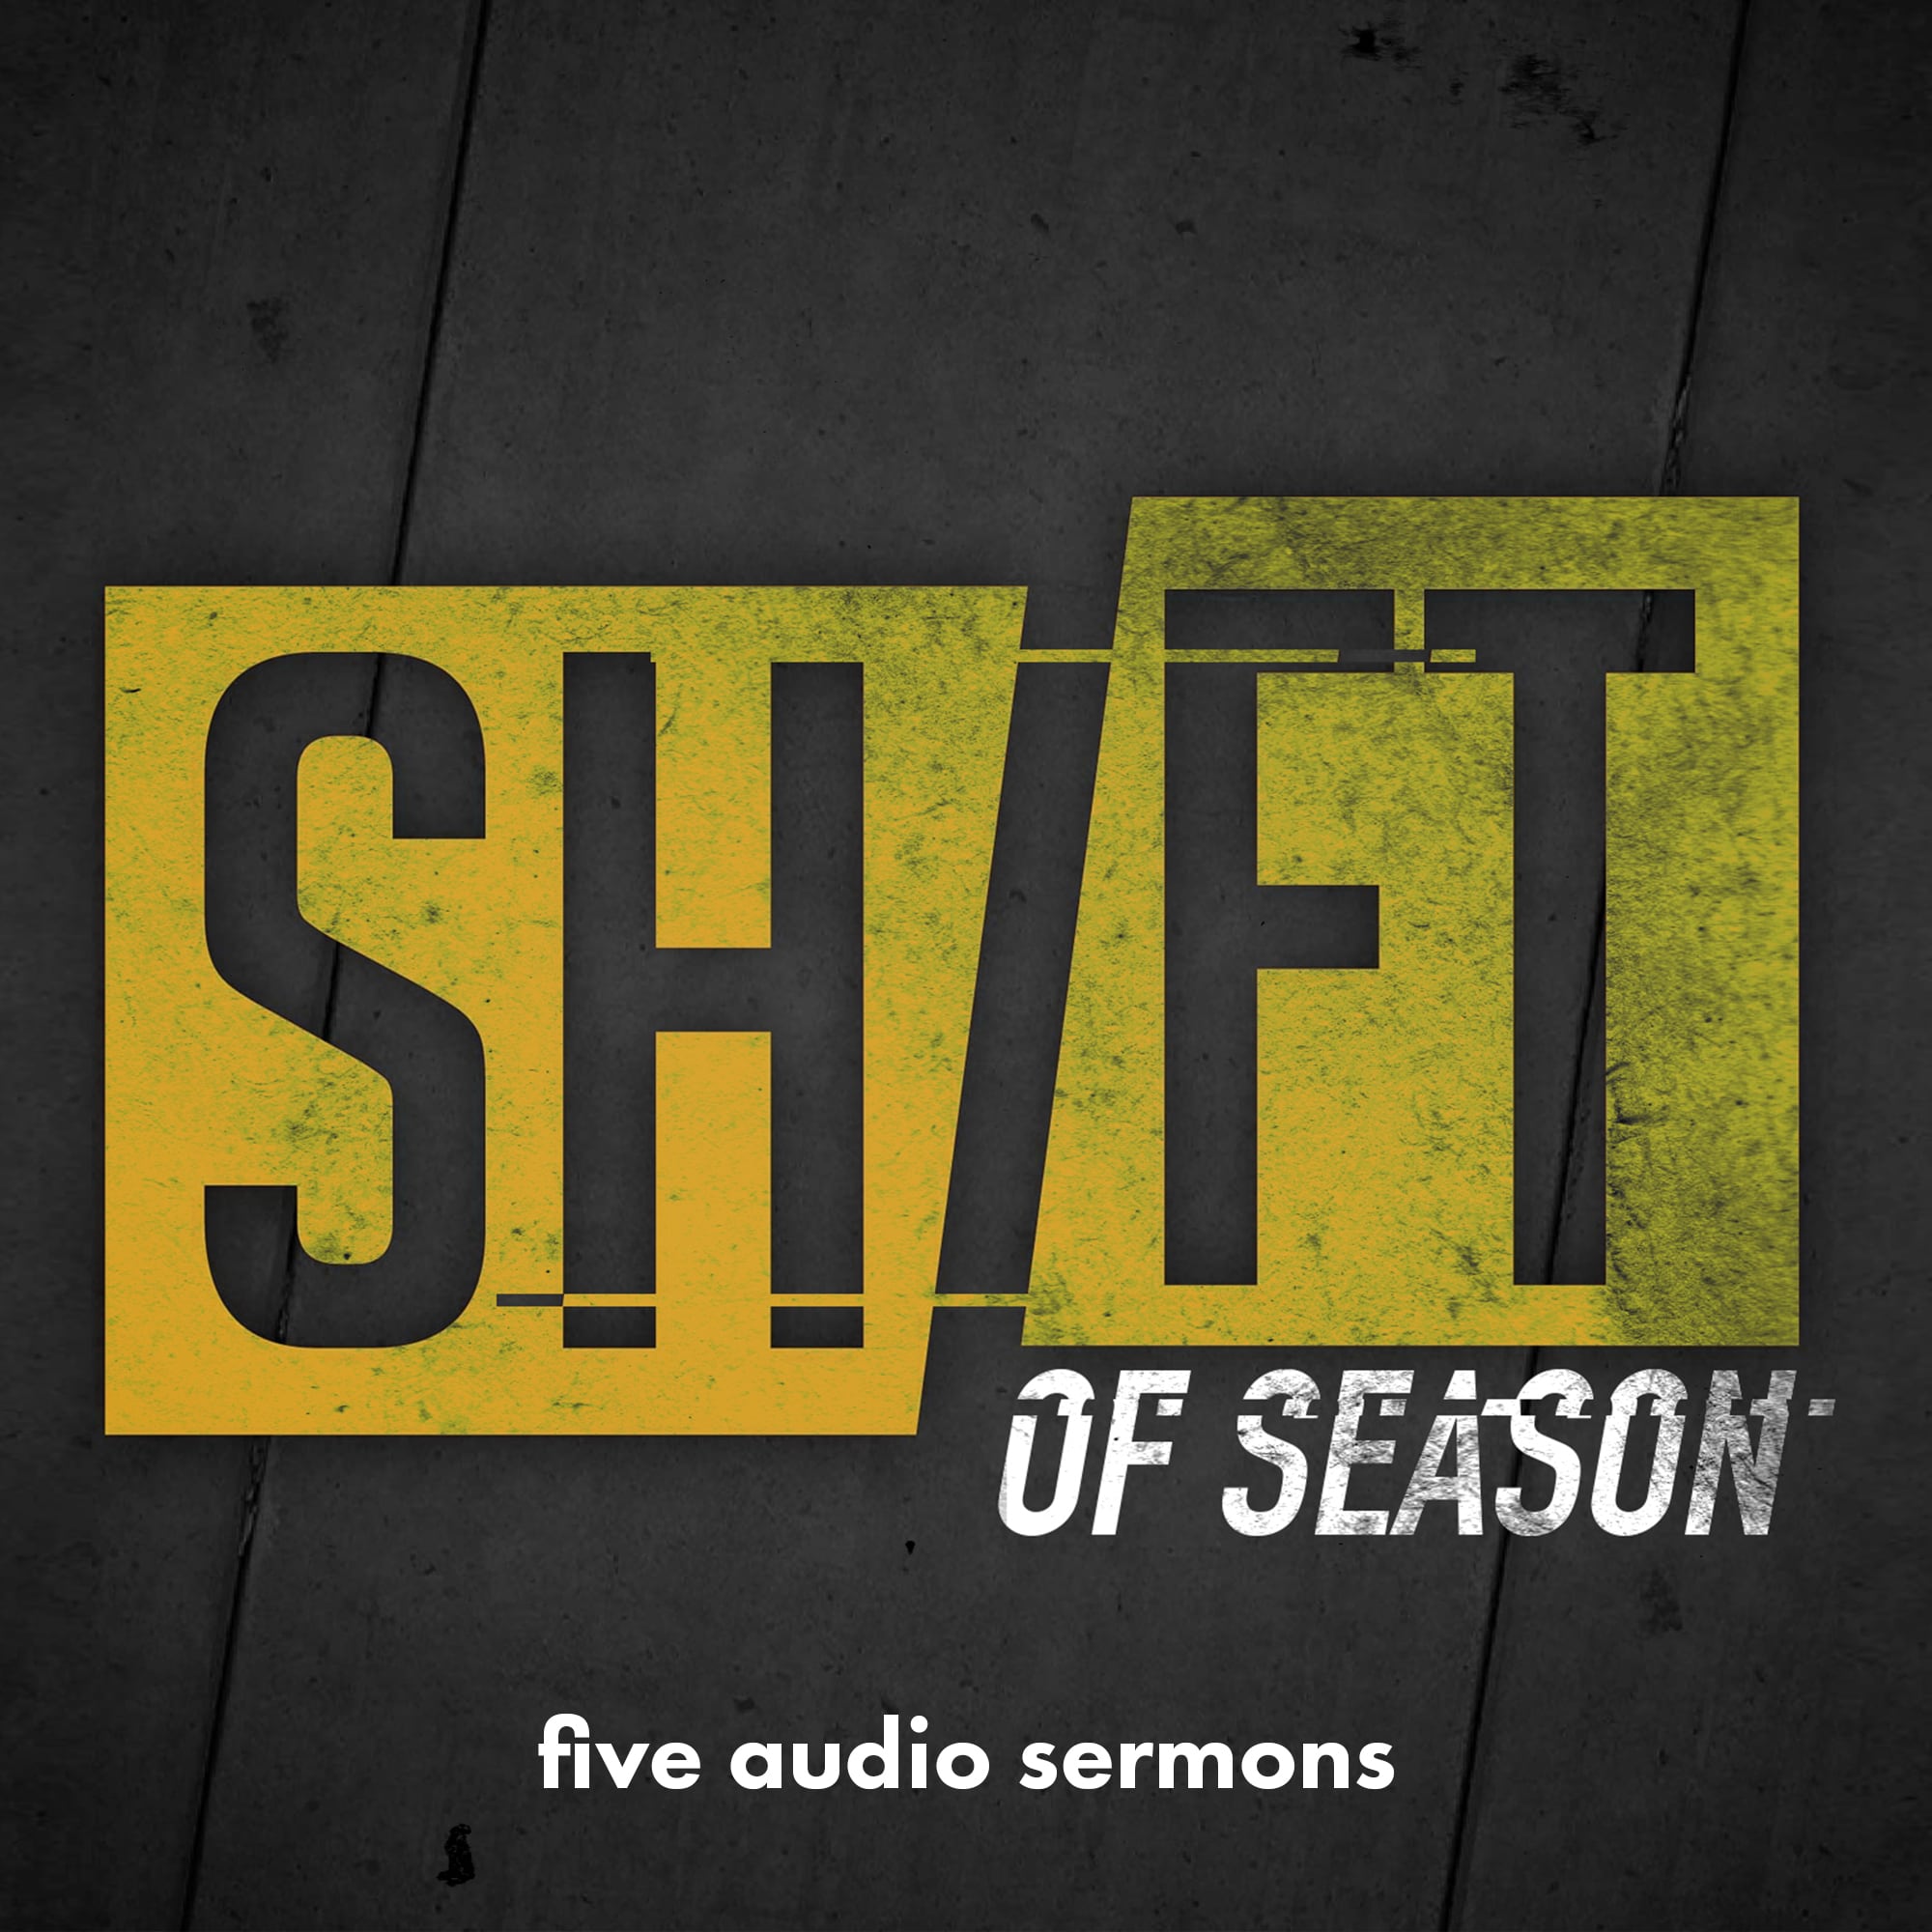 Series: Shift of Season